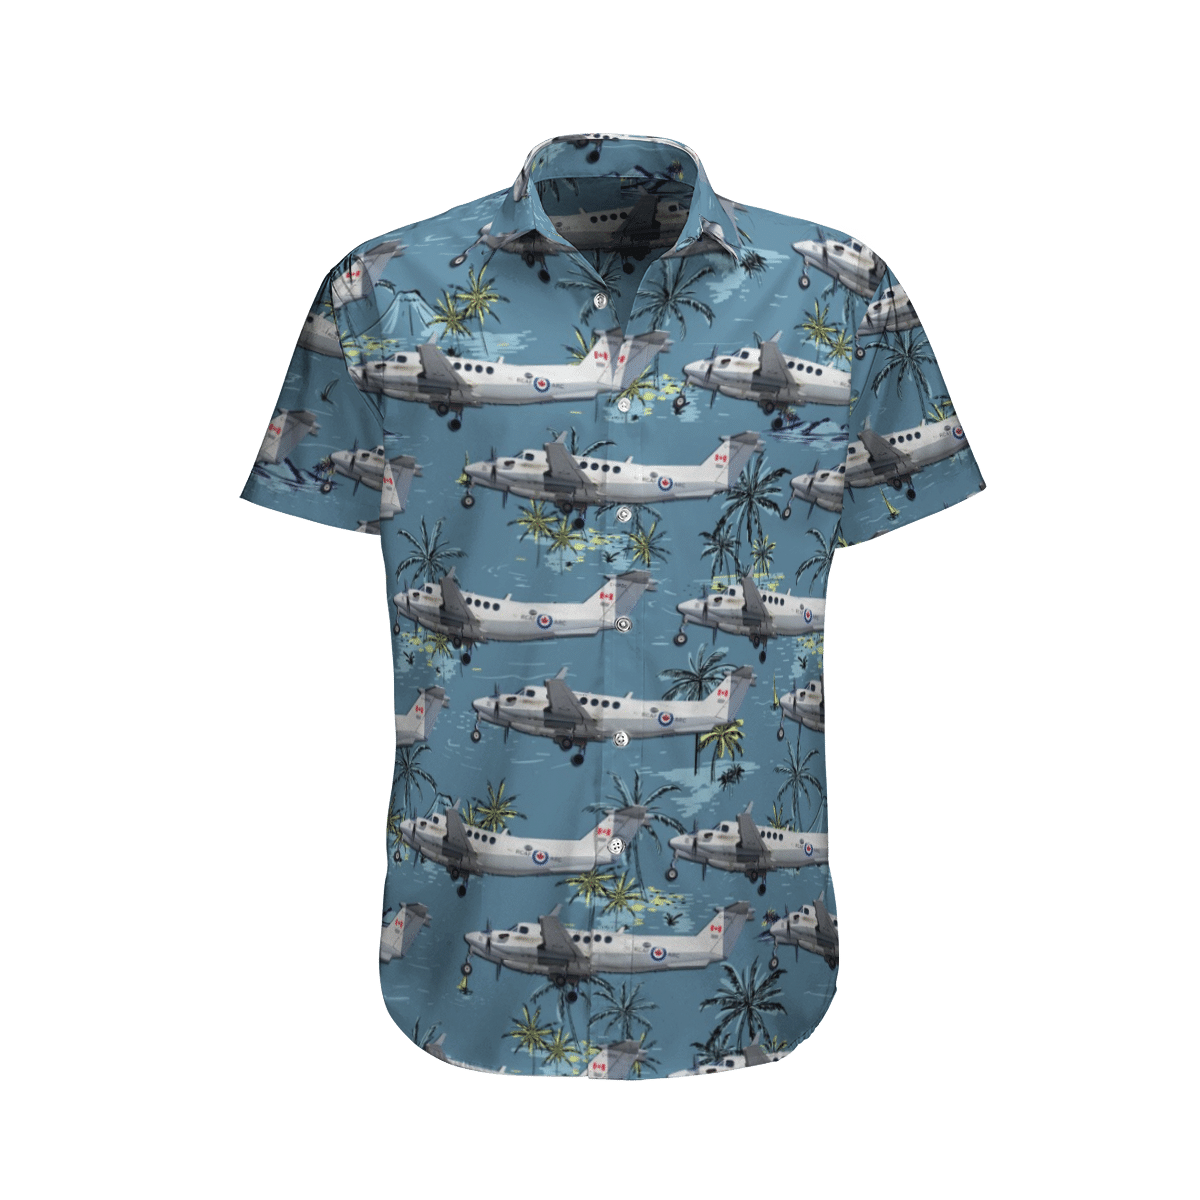 Get a new Hawaiian shirt to enjoy summer vacation 164